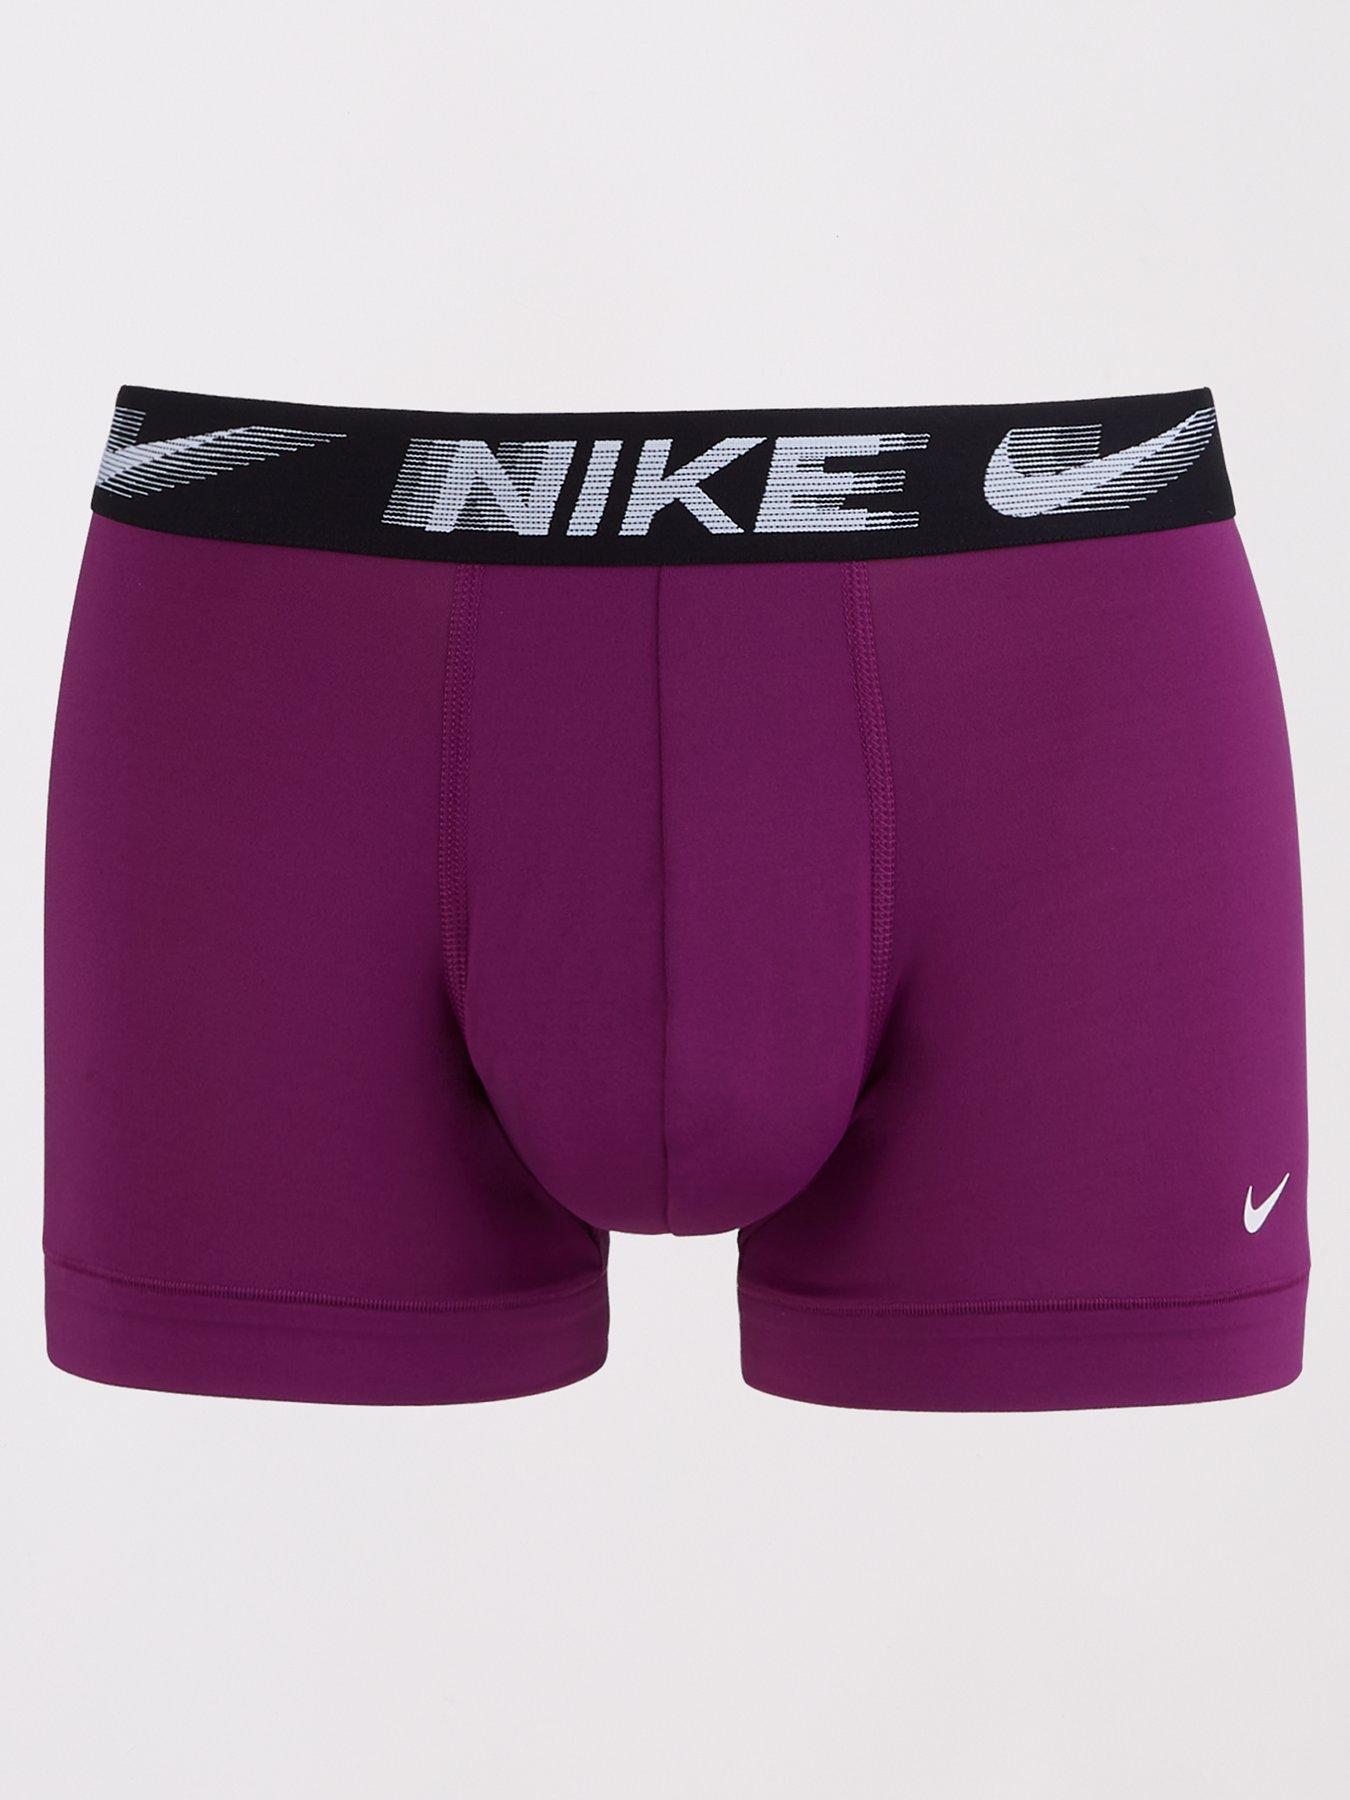 Nike Underwear Mens Boxer Brief 3pk - Multi | very.co.uk